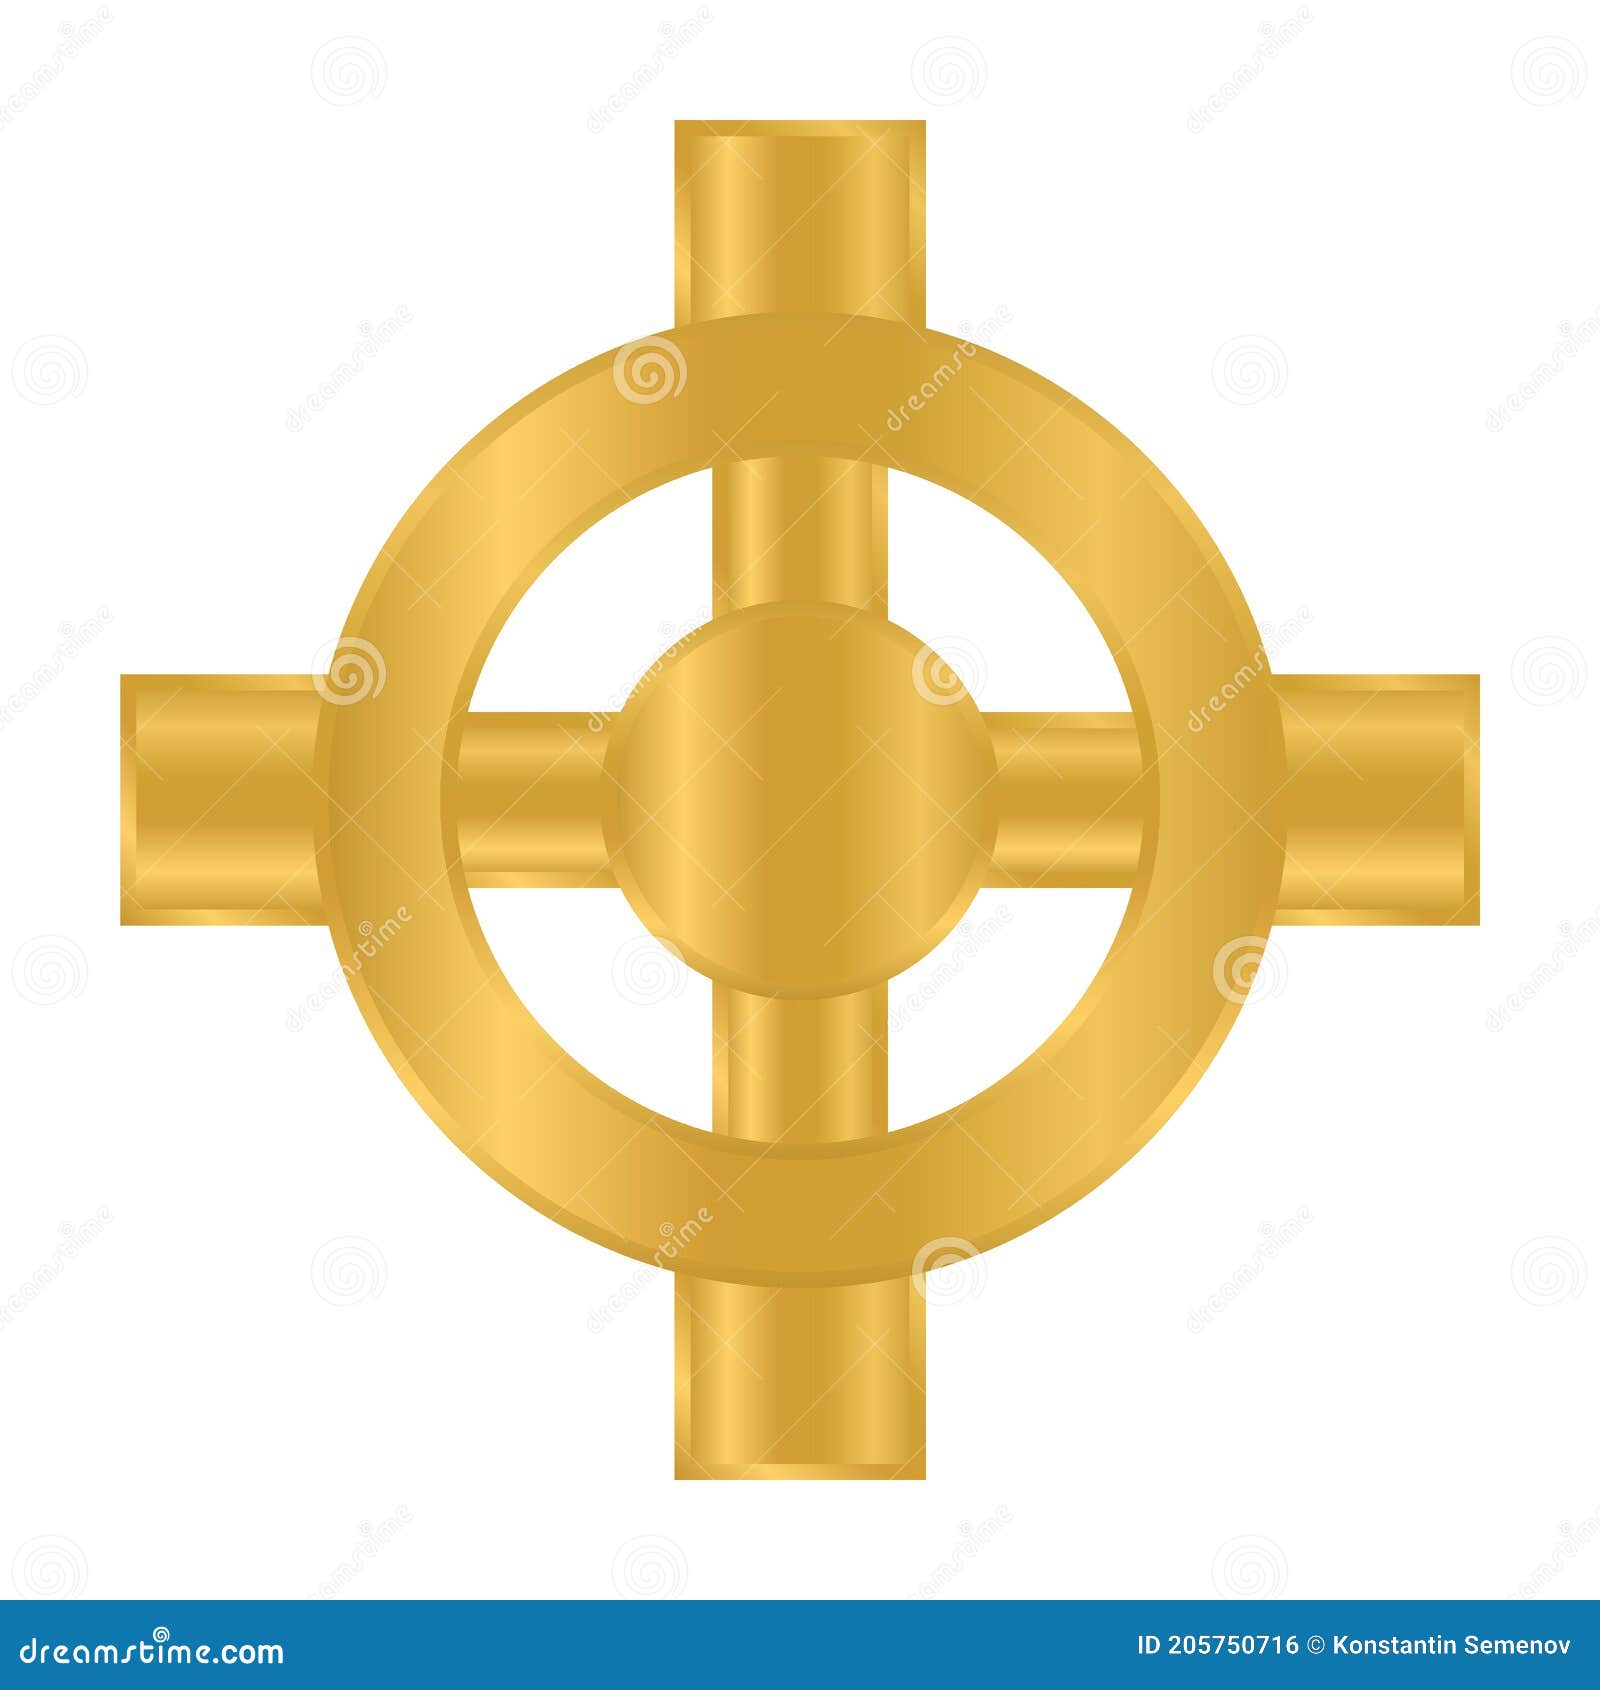 celtic cross icon on white